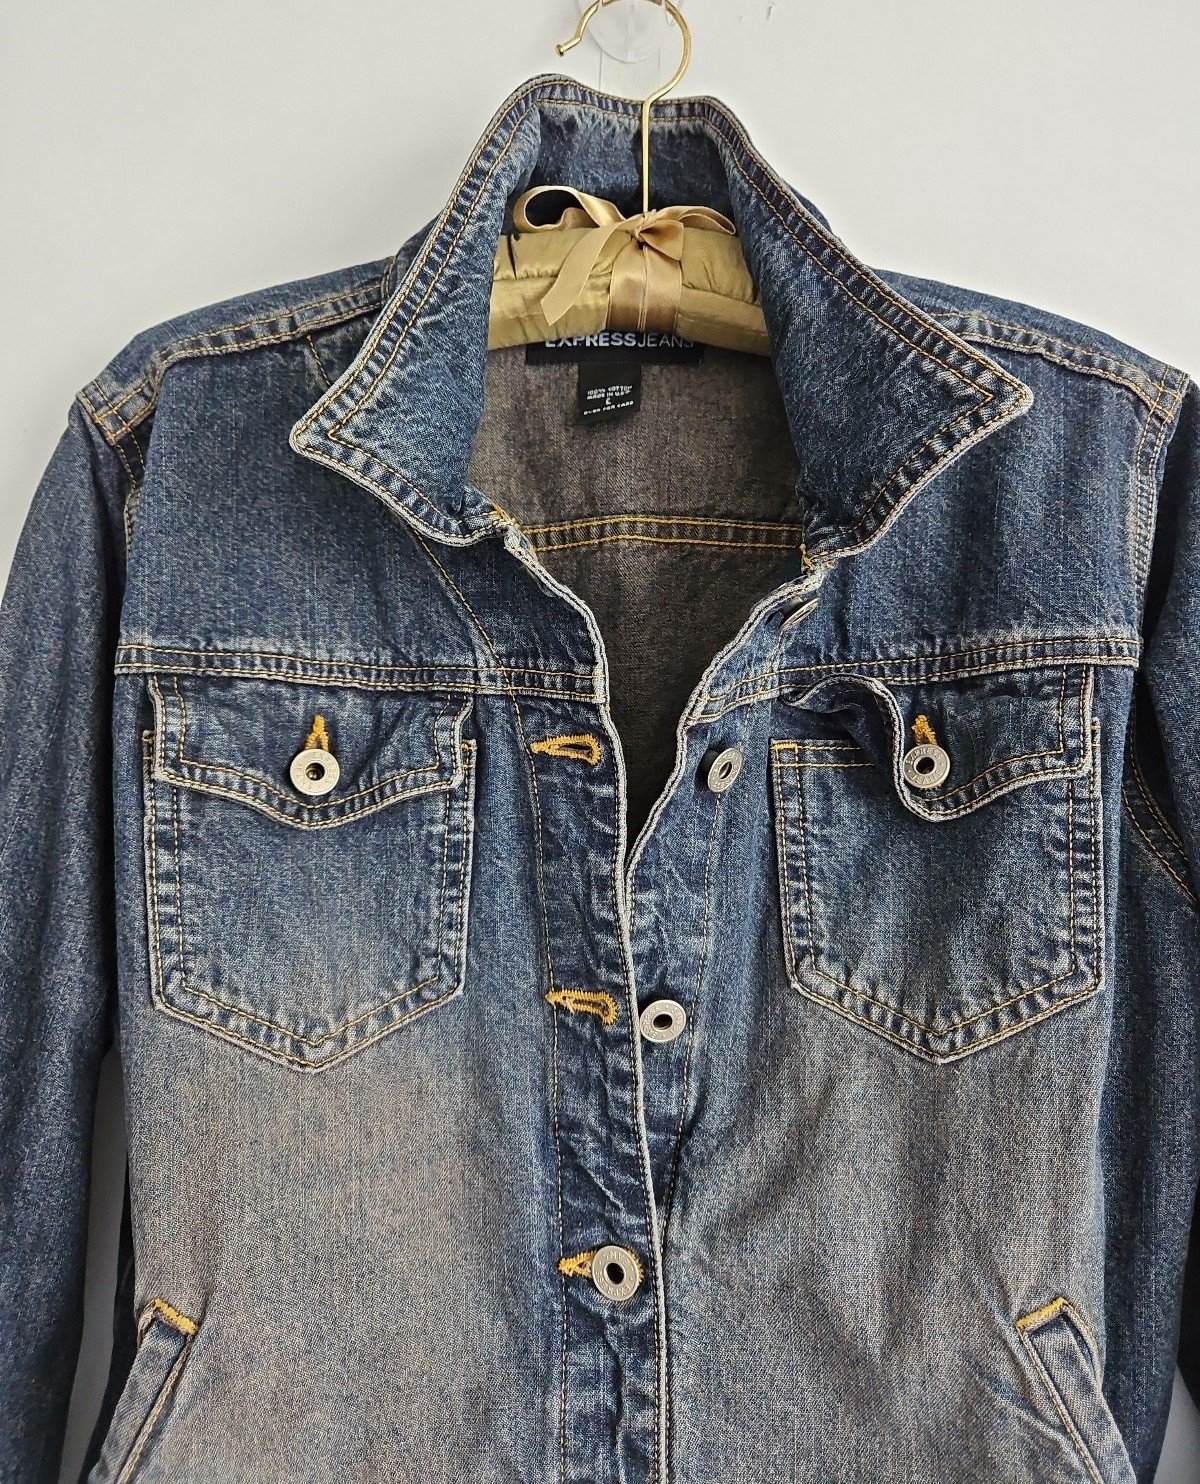 Discounted Express Jeans denim jacket iDcbcAH0n online store